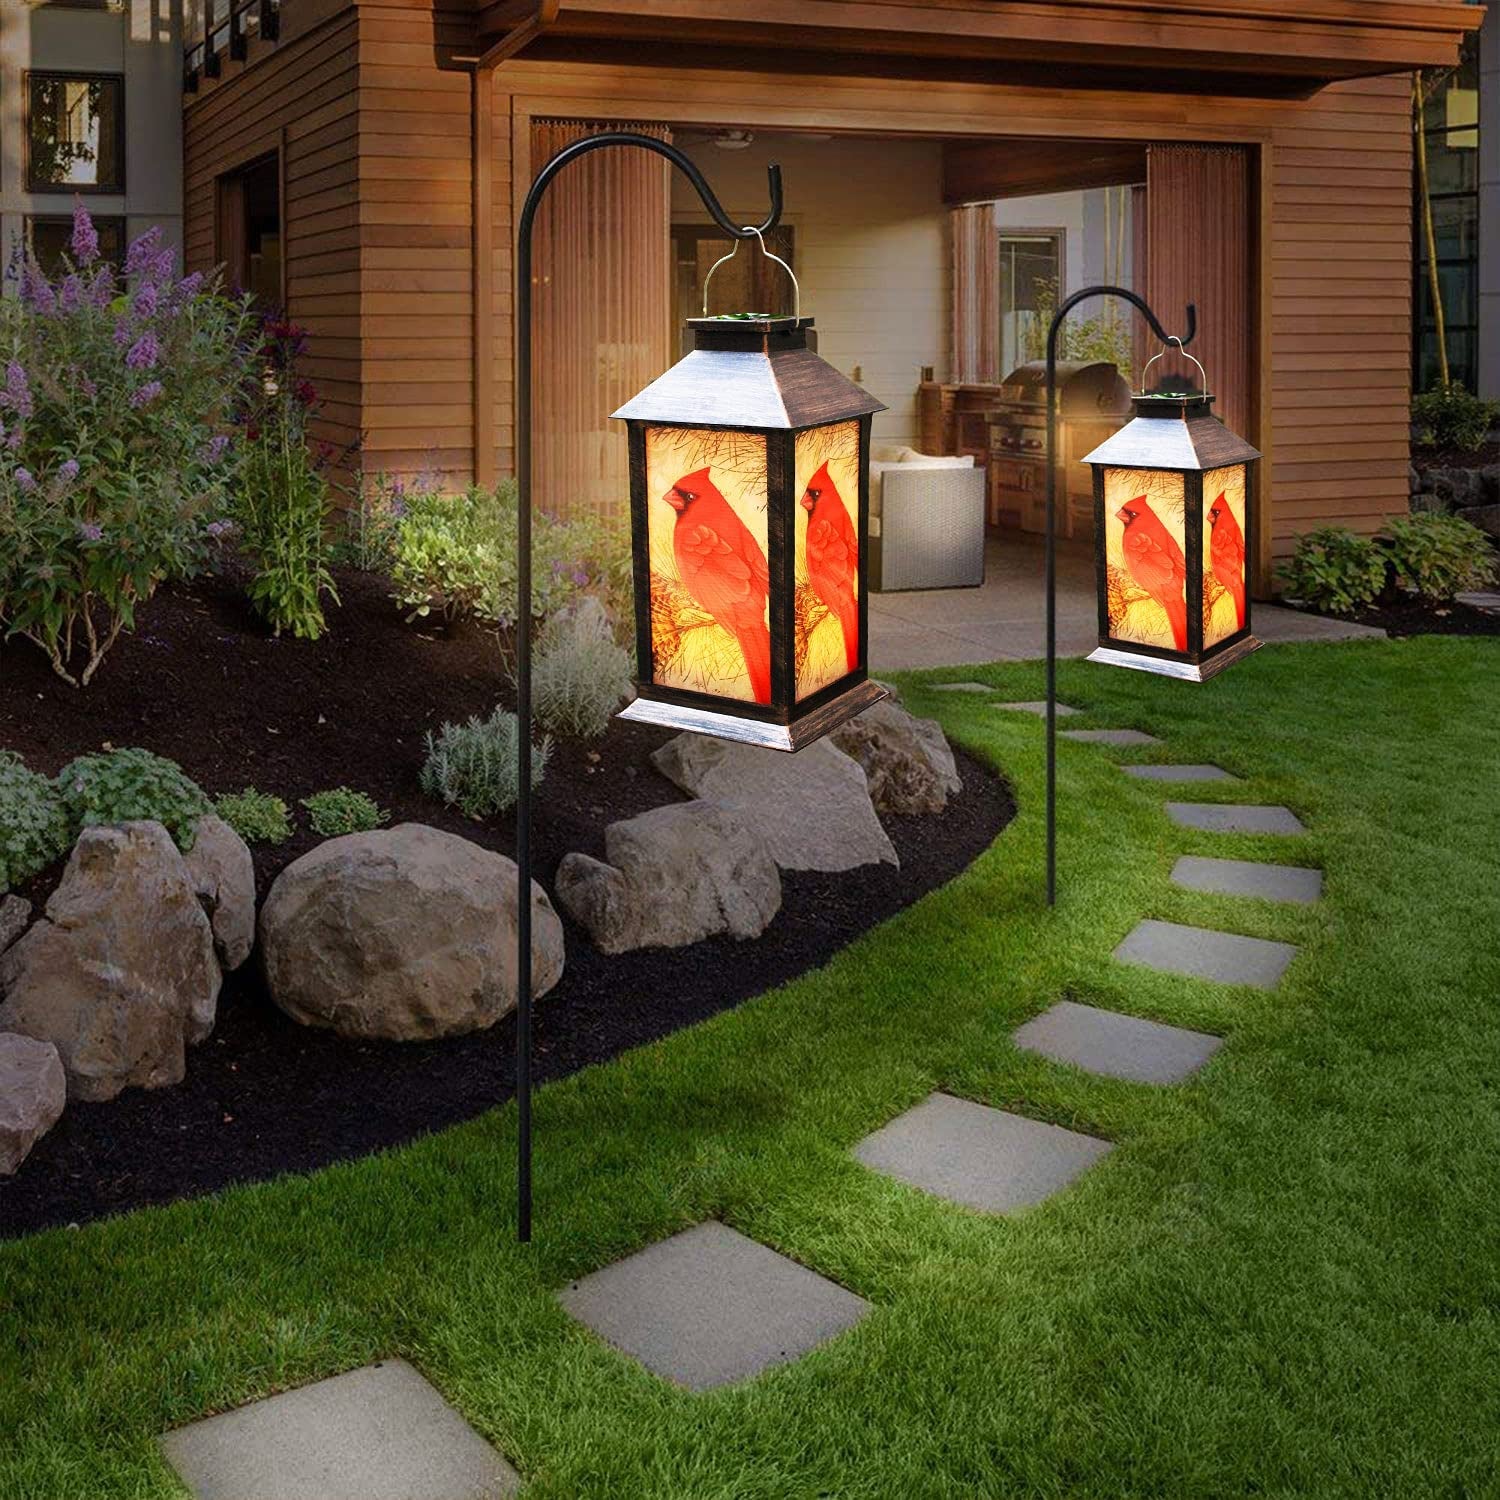 Solar Lanterns, Outdoor Hanging Lanterns Waterproof LED Solar Cardinal Lights Tabletop Lamp for Outdoor Patio Garden（1Pack